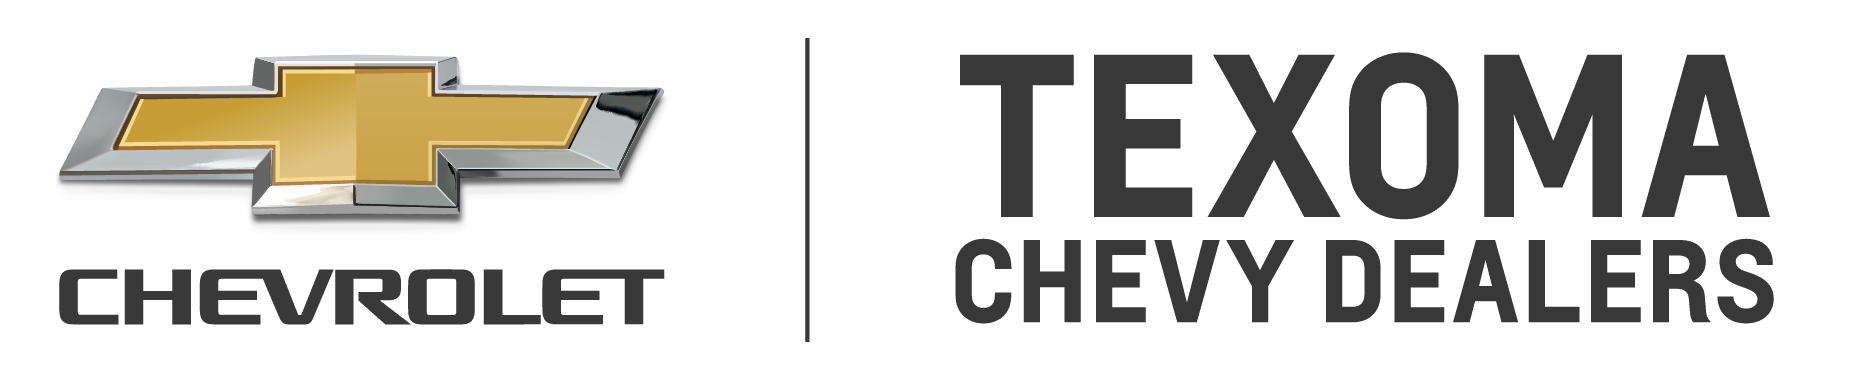 Texoma Chevy Dealers Student Scholarship Program